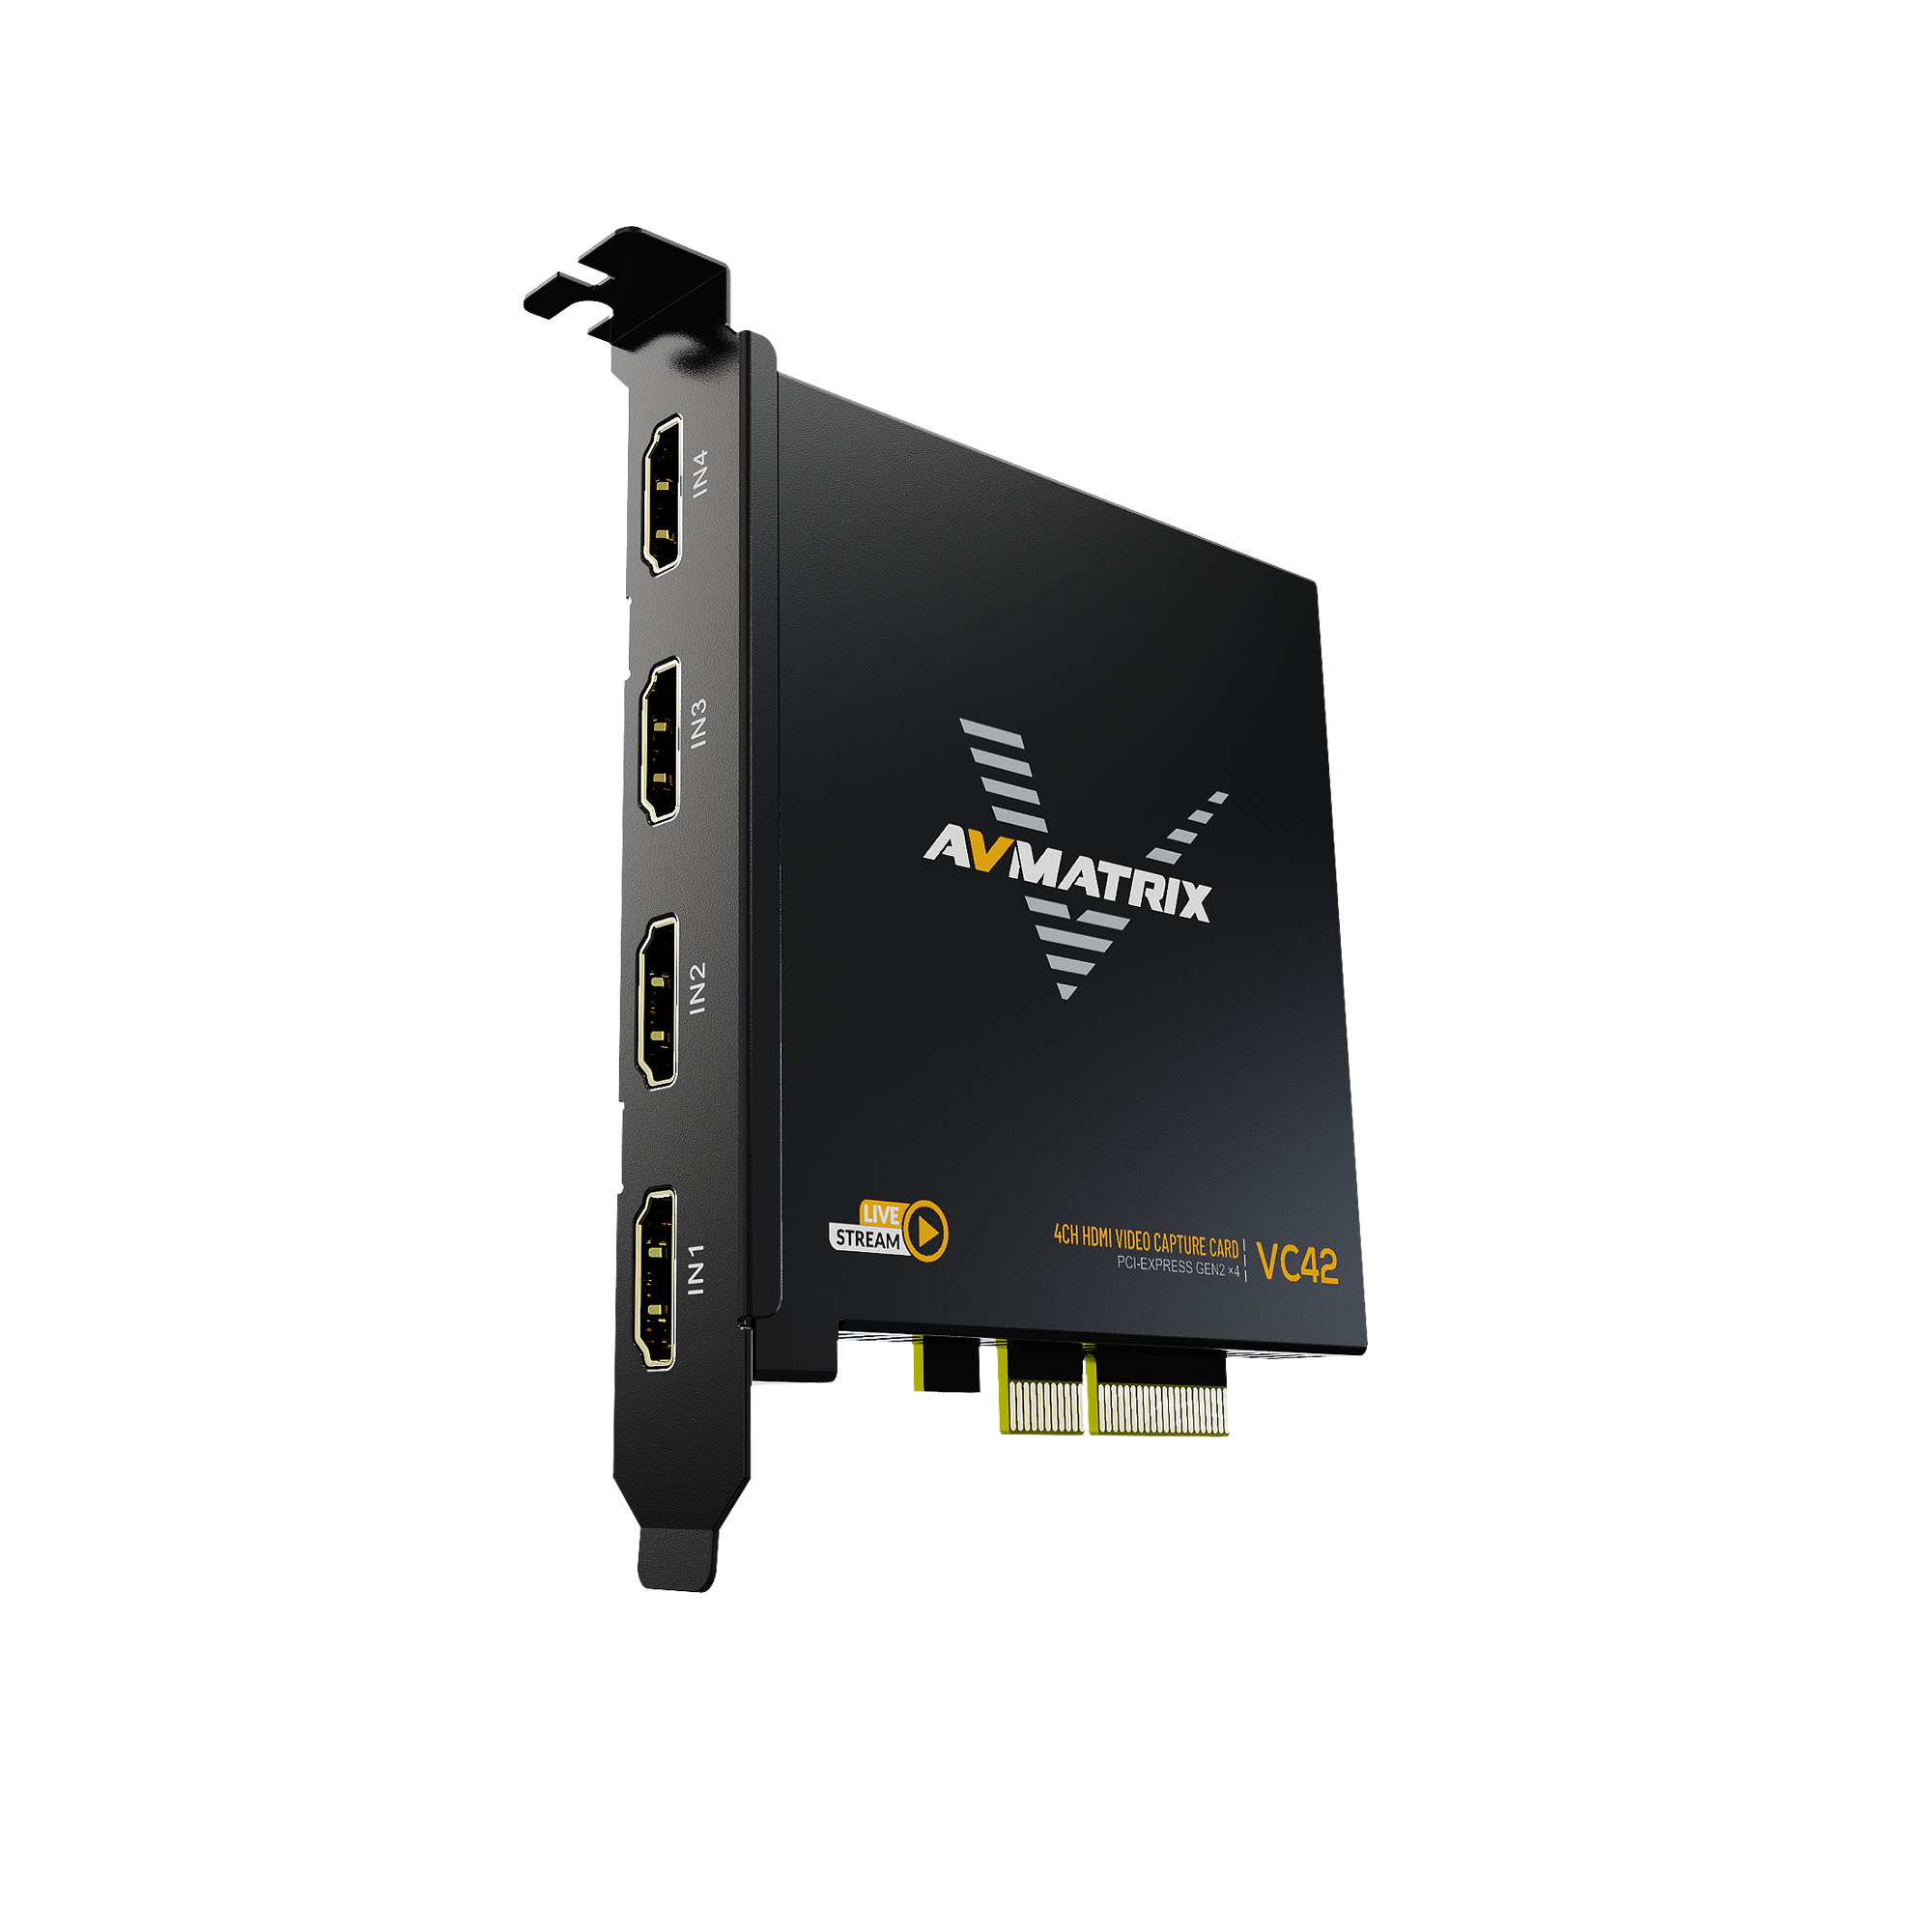    AVMATRIX VC42 4CH HDMI PCIE   Ultra-mart